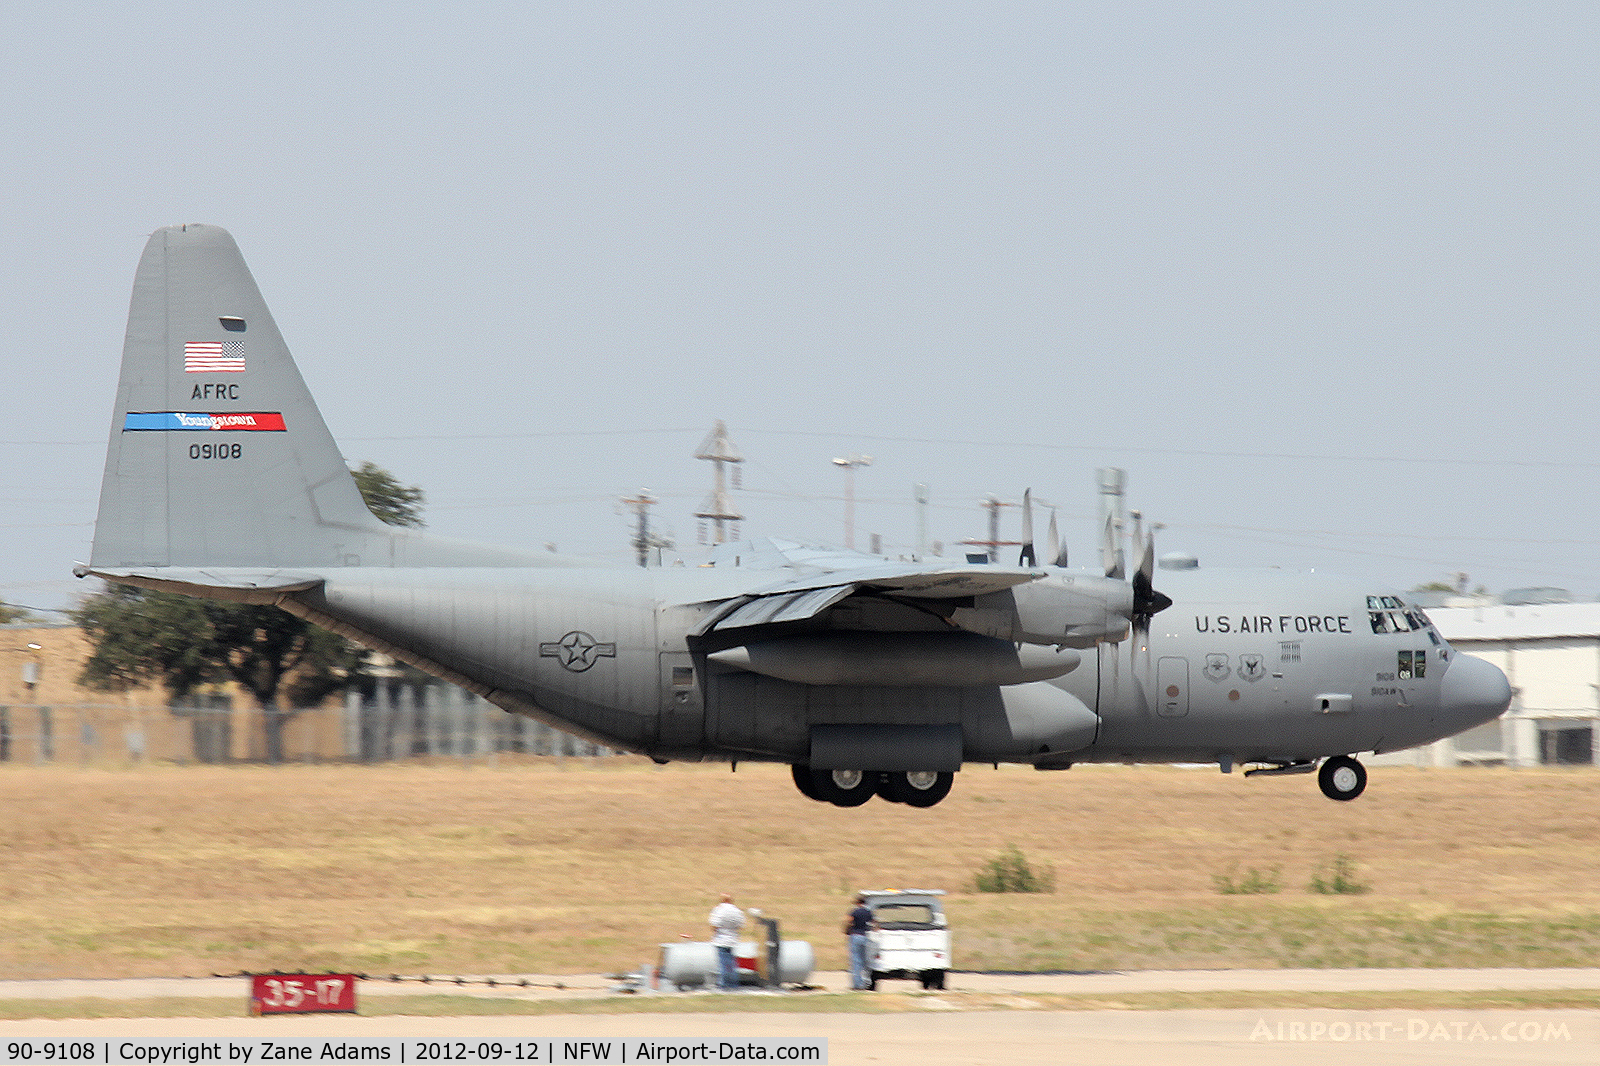 90-9108, 1990 Lockheed C-130H Hercules C/N 382-5239, Landing at NAS JRB Fort Worth